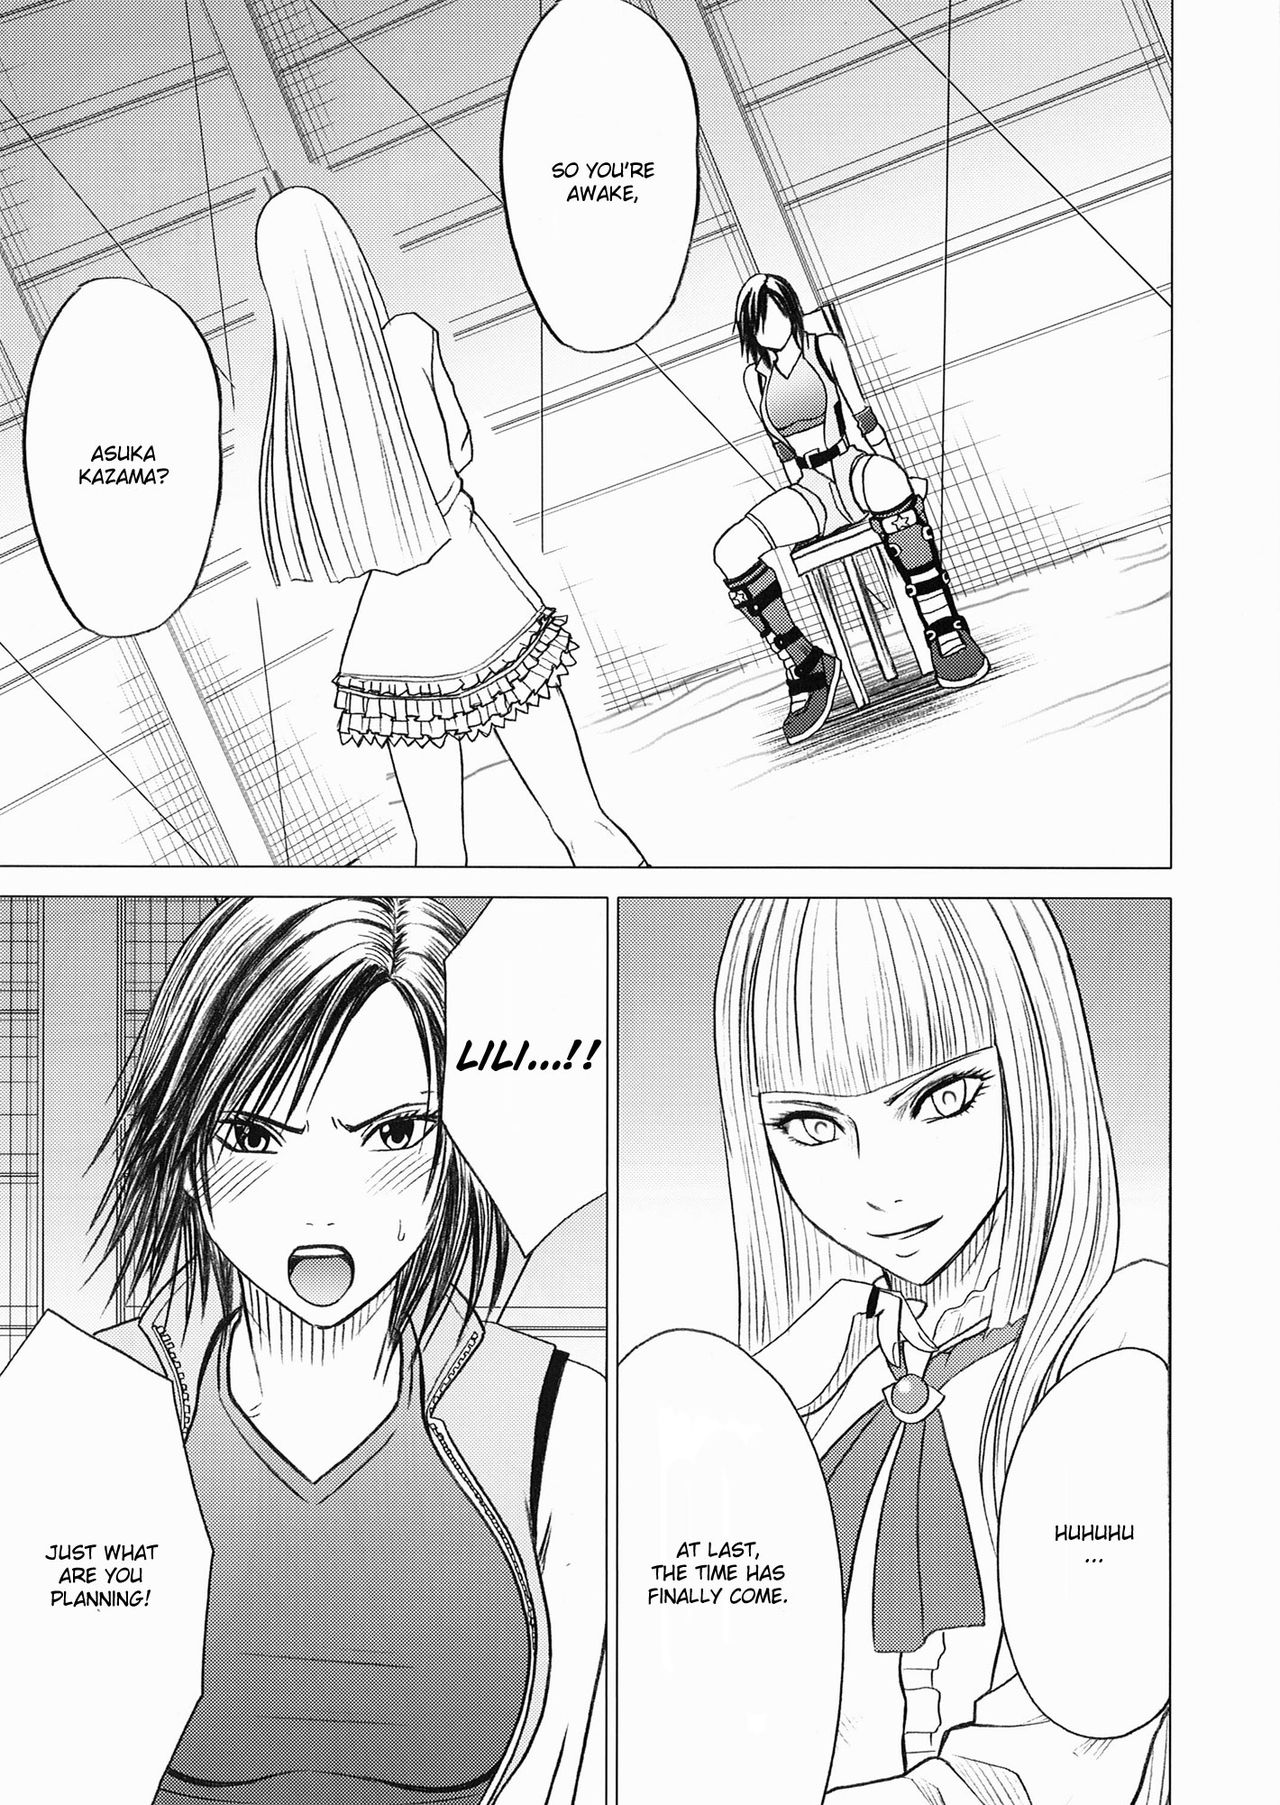 [Crimson Comics] Lili x Asuka (Tekken) (Eng)(CGRascal) 